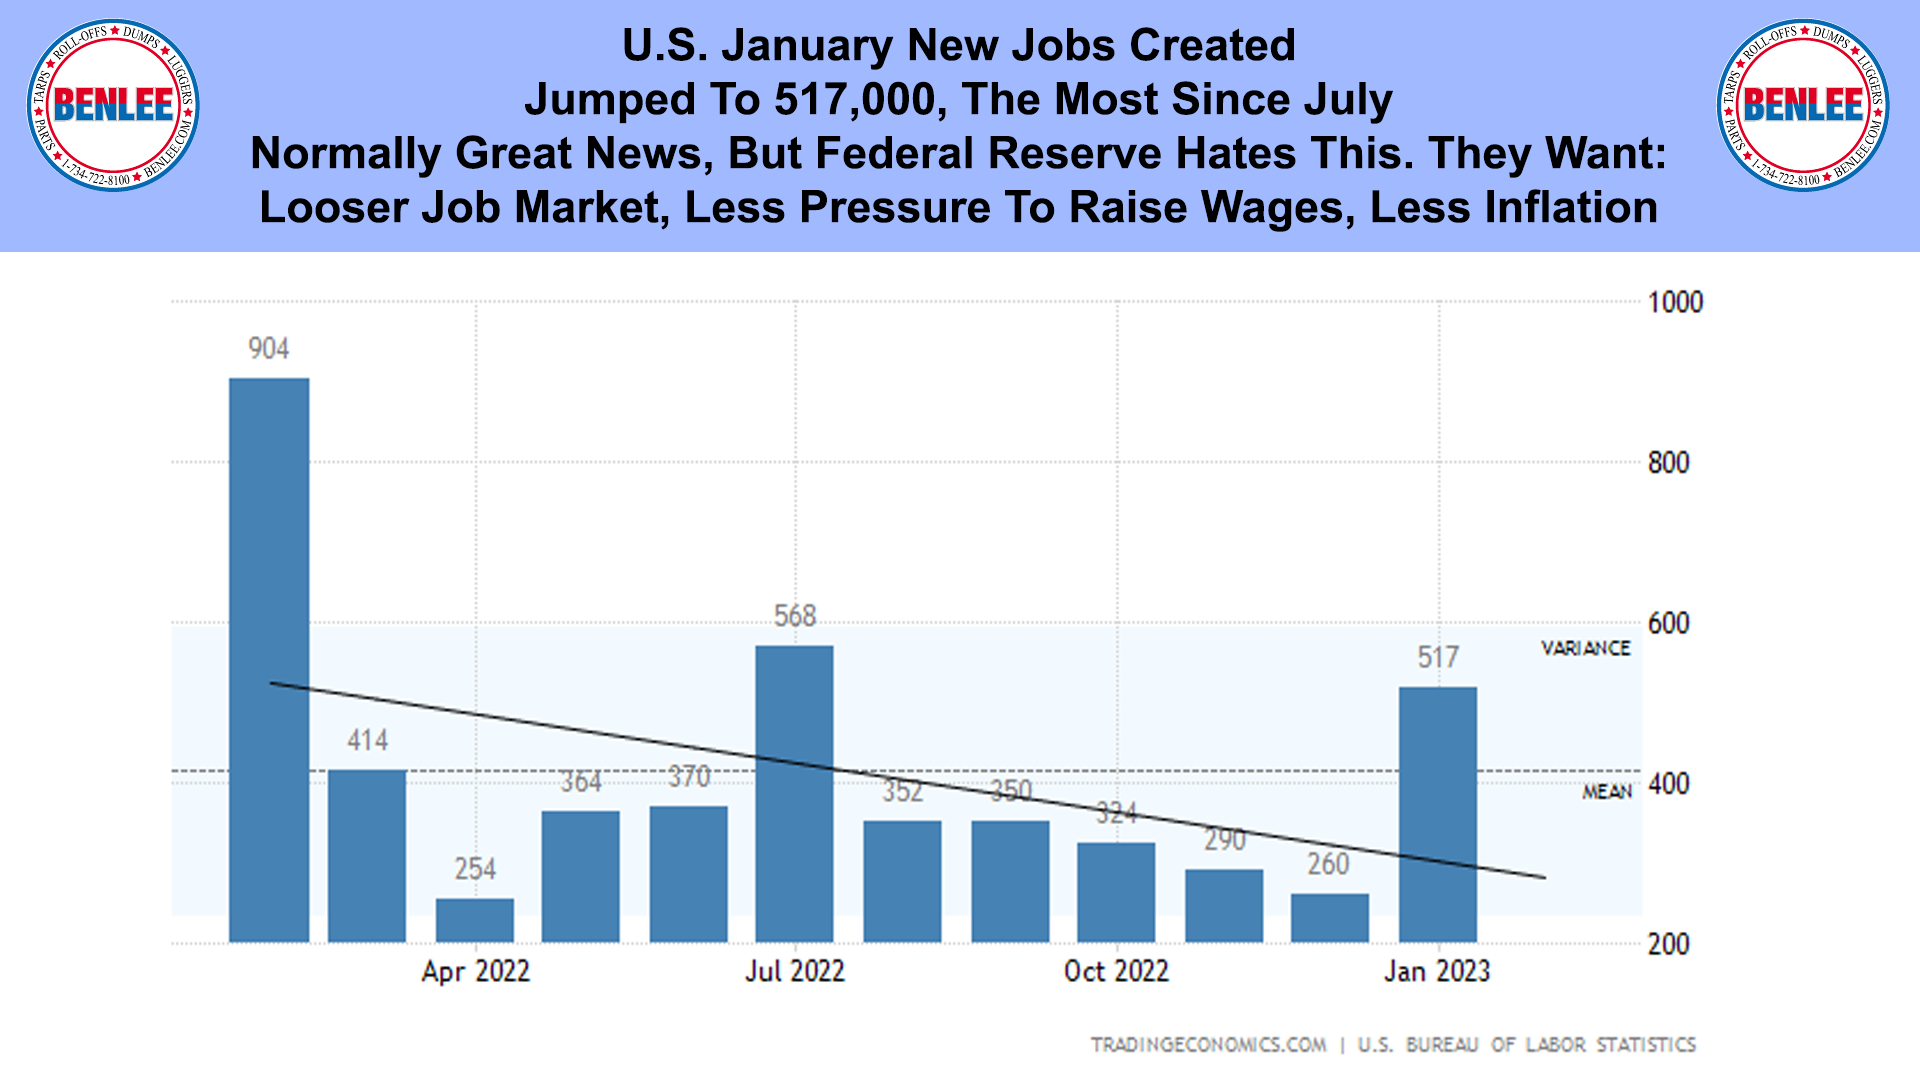 U.S. January New Jobs Created